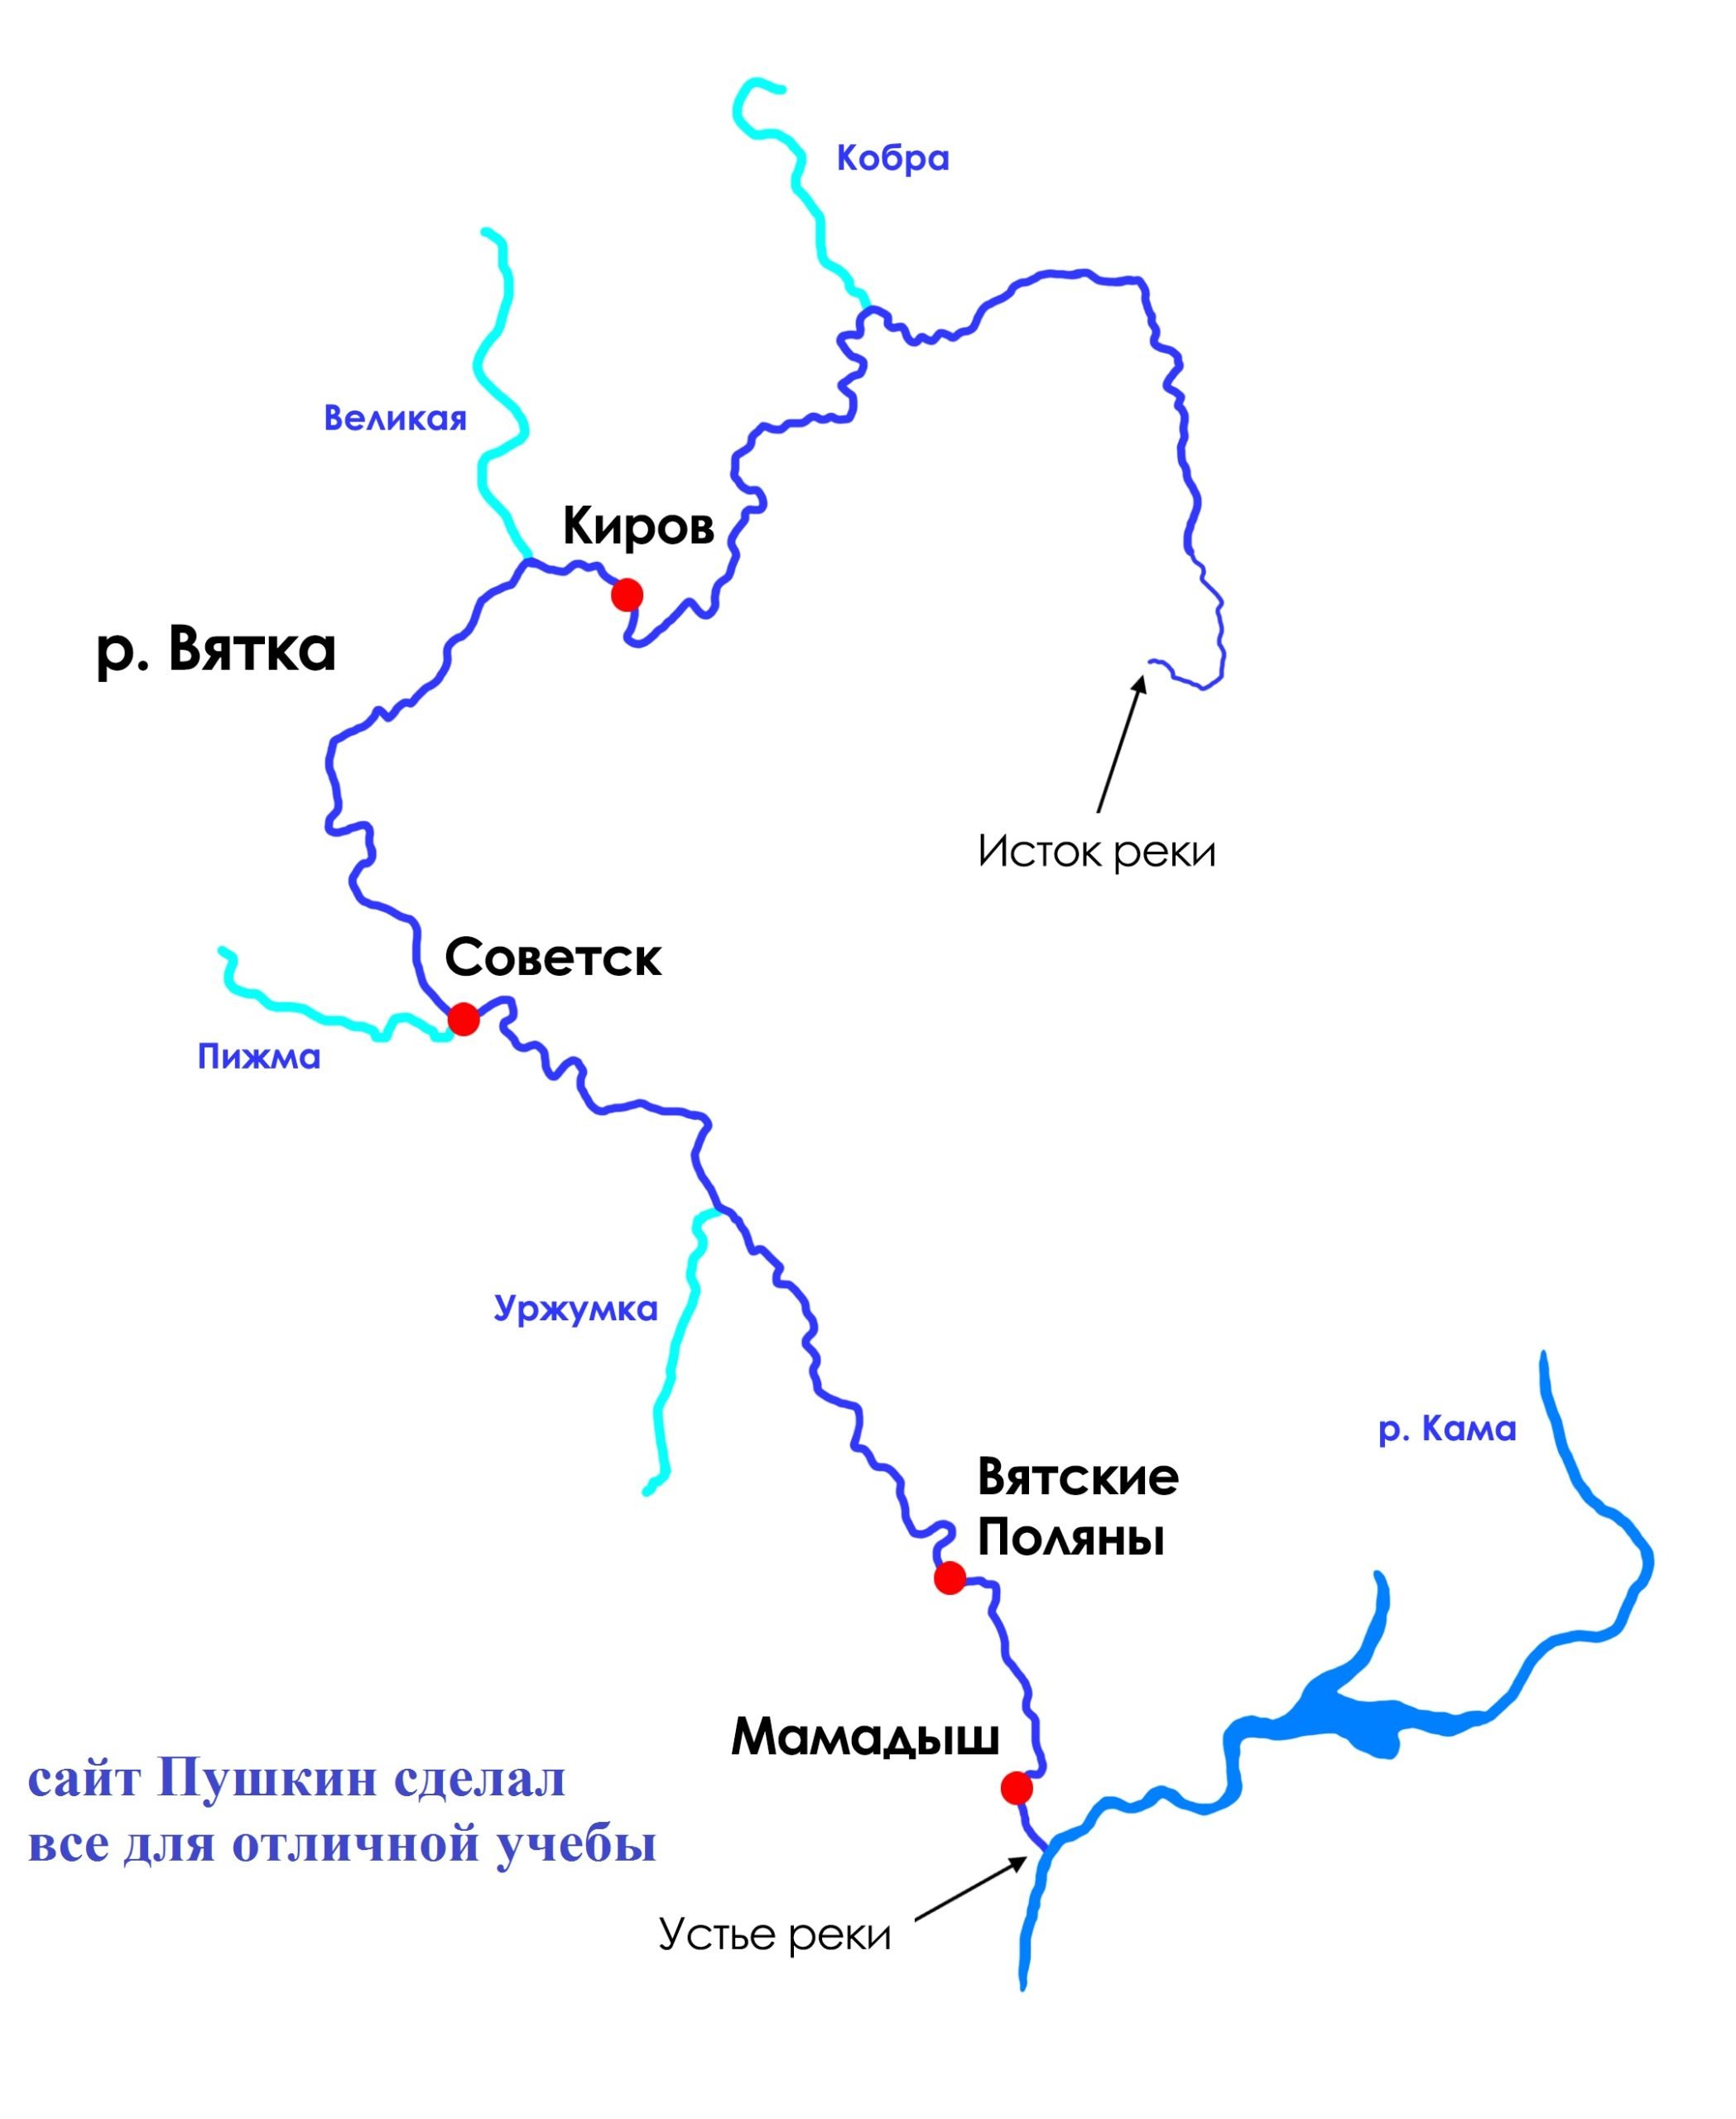 Река кама является притоком реки. Исток реки Вятка в Кировской области на карте. Куда впадает река Вятка Кировской области. Исток реки Вятка в Кировской. Удмуртия реки Кама и Вятка карта.